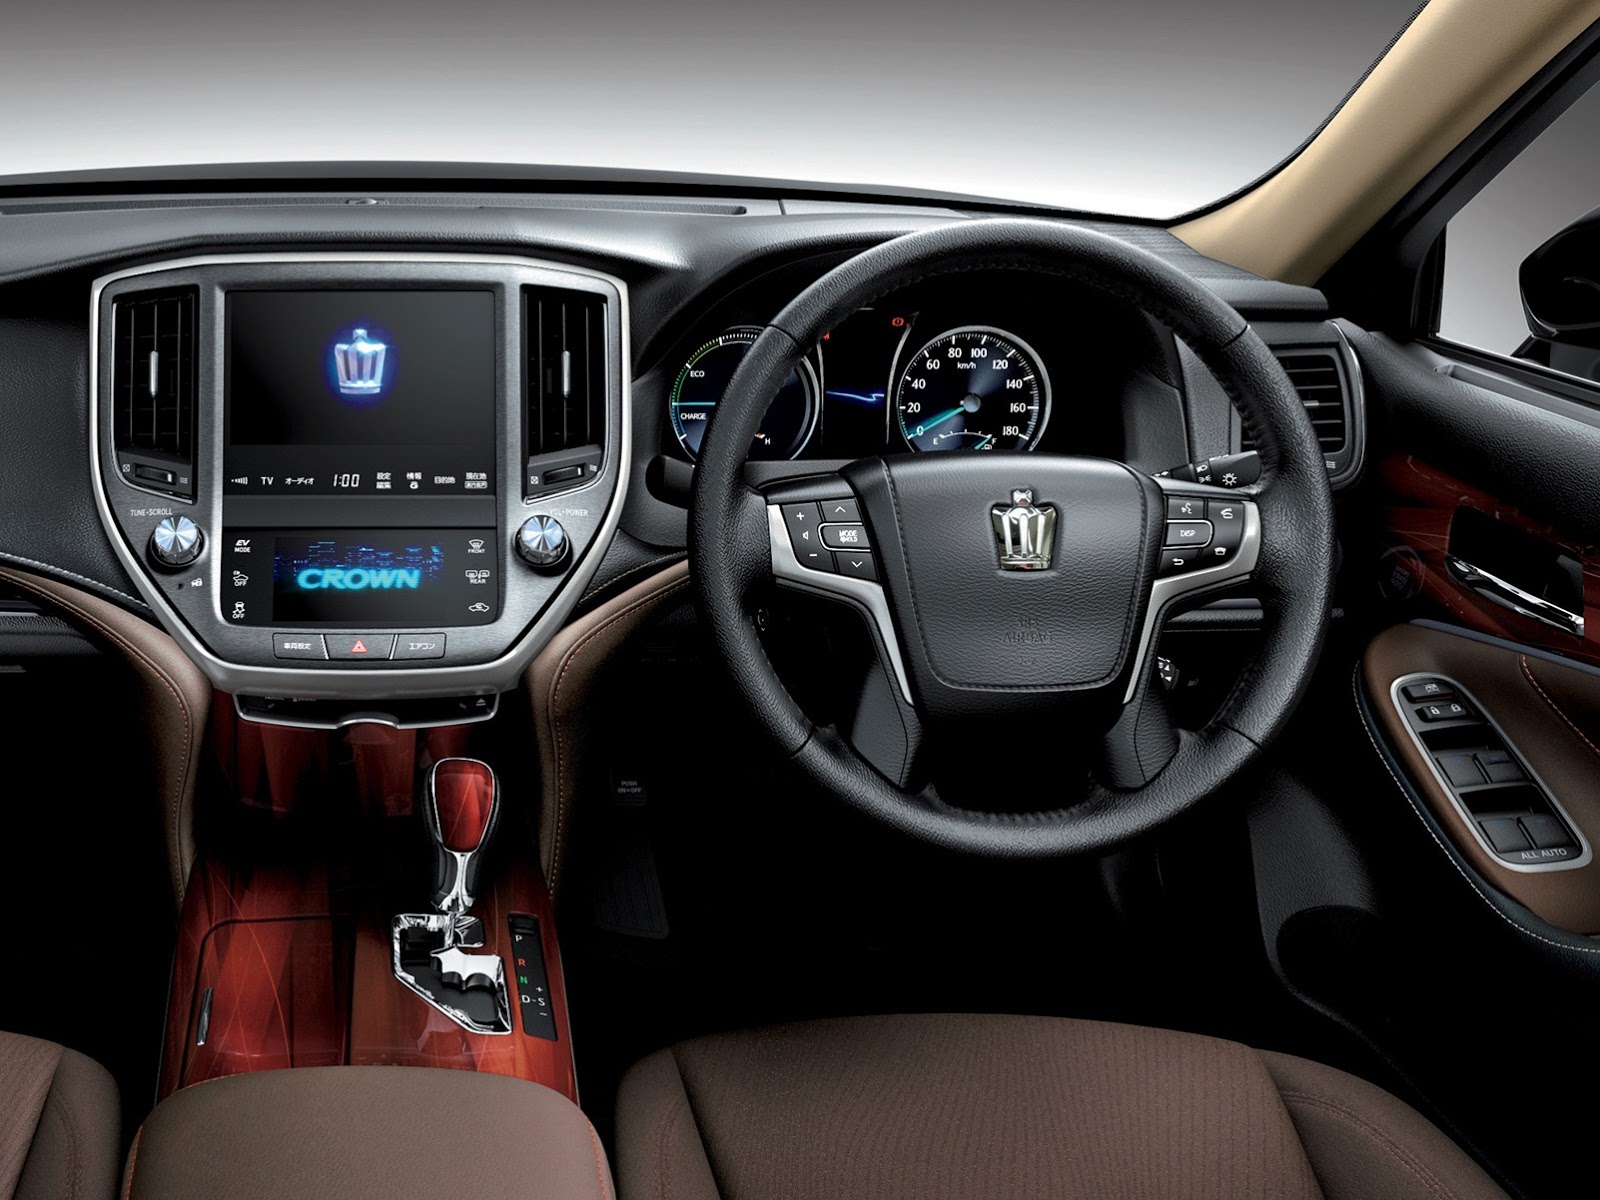 Toyota Crown 14th Generation Interior Dashboard